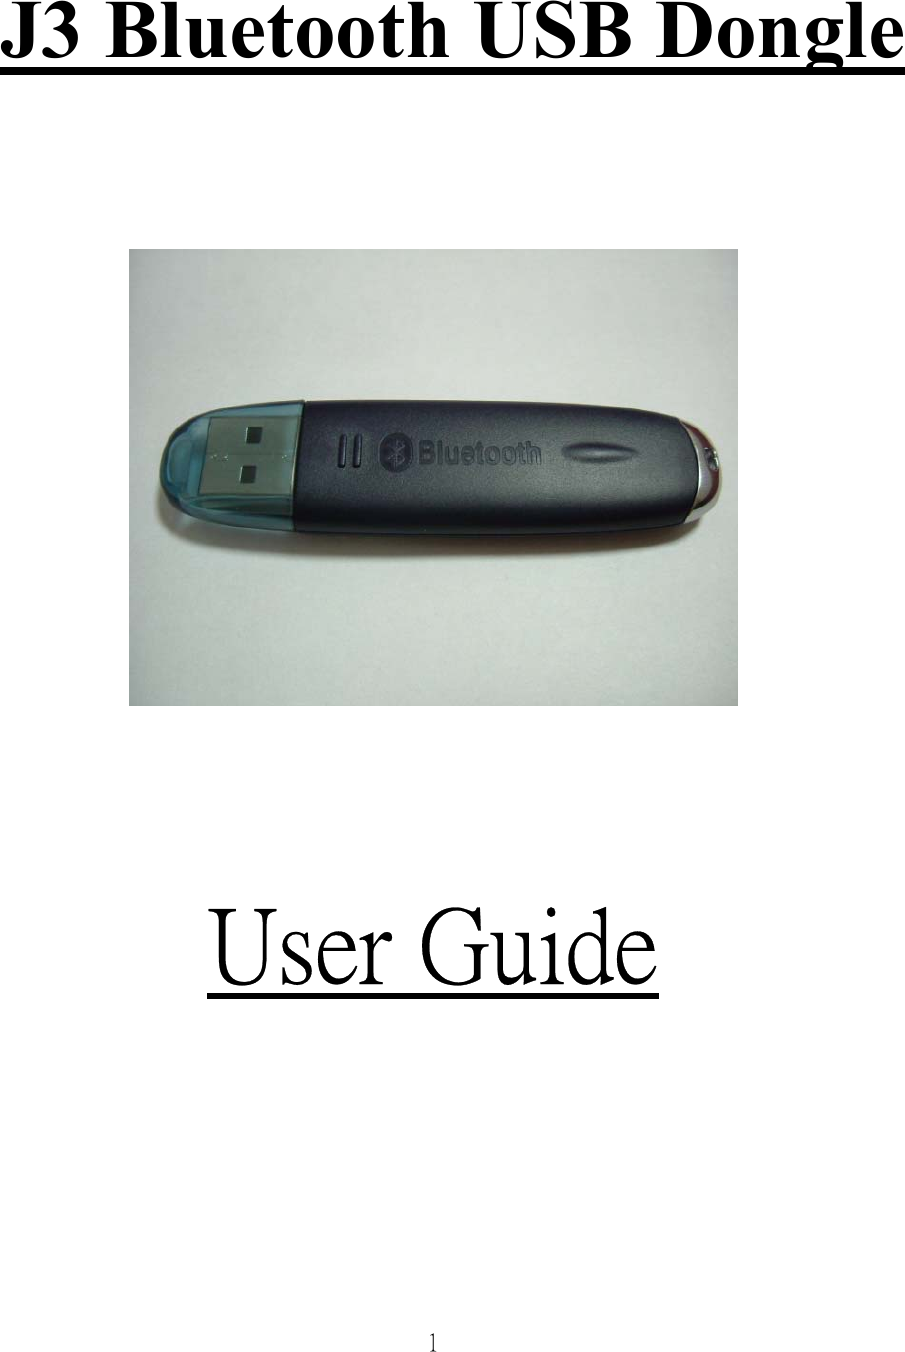 1  J3 Bluetooth USB Dongle    User Guide 